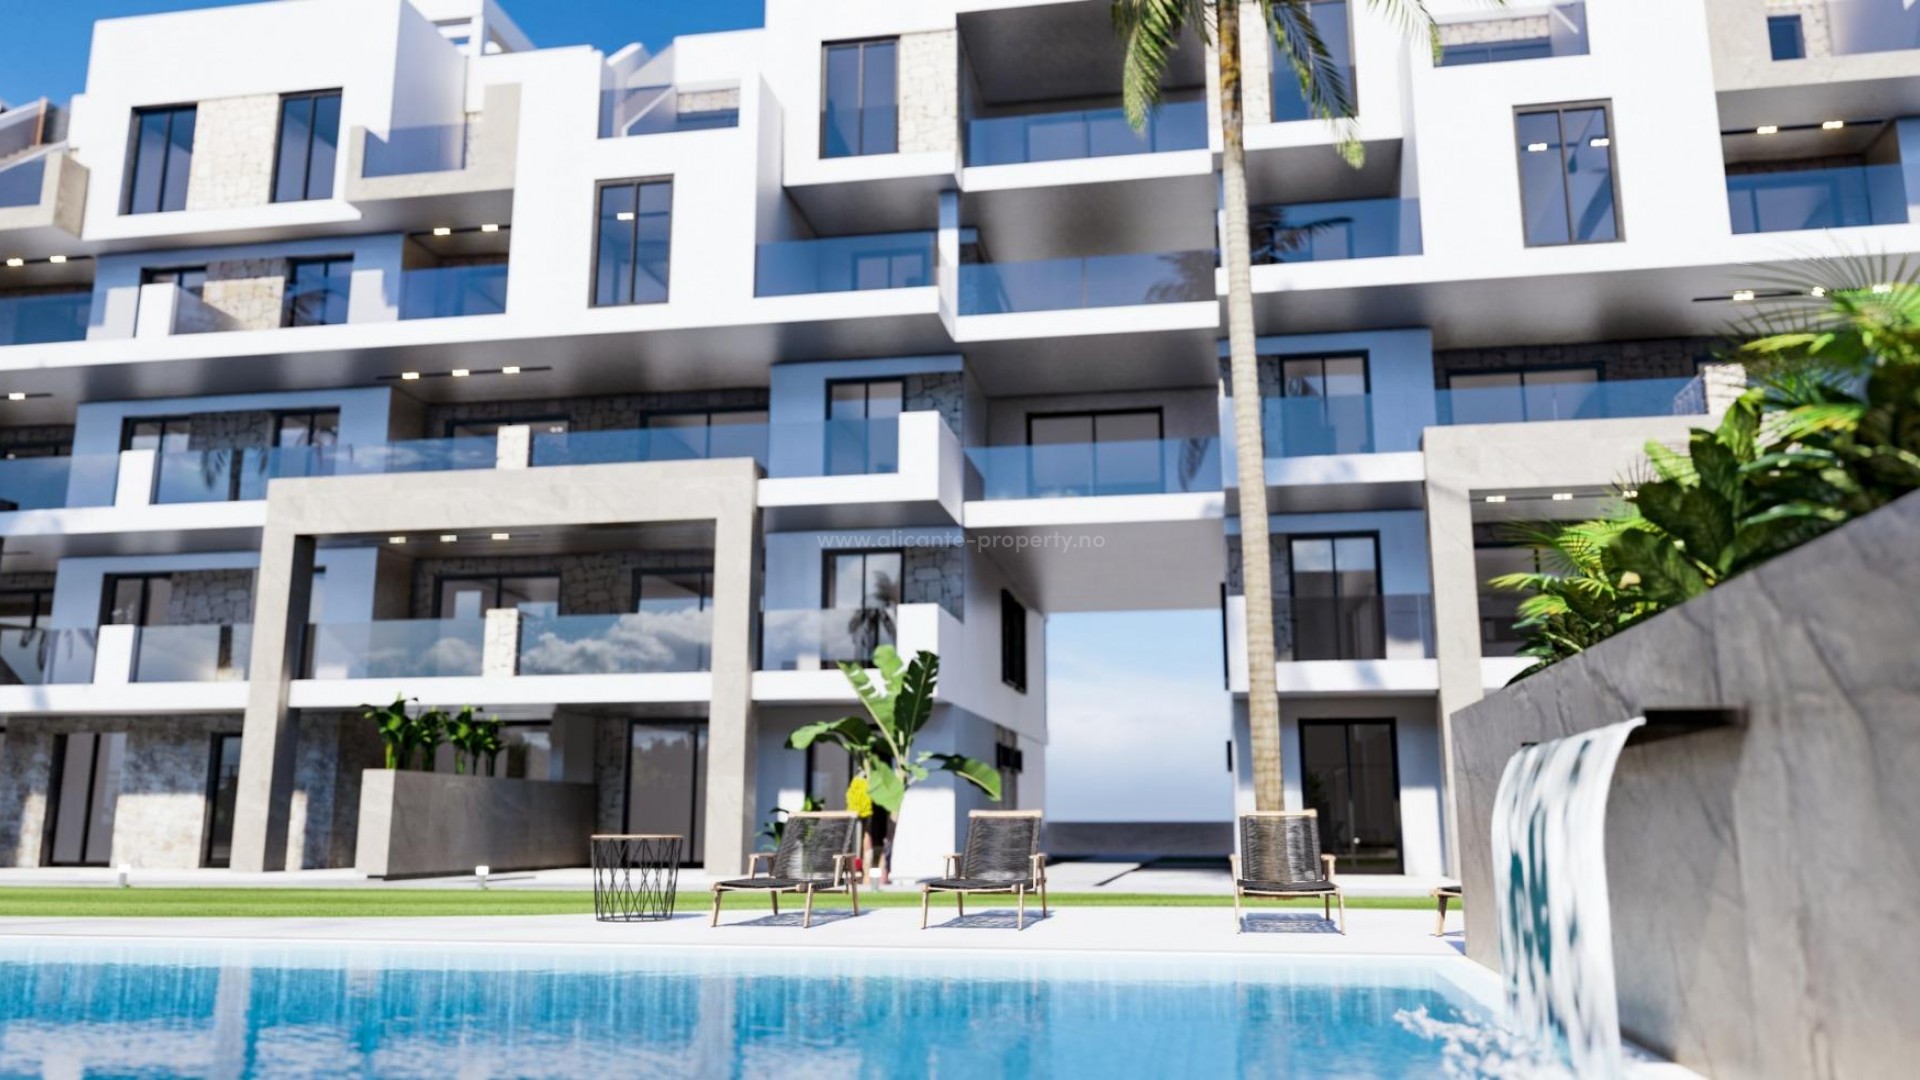 New apartment complex in I El Raso, Guardamar del Segura, 2/3 bedrooms, communal swimming pools, views of the salt lagoon, glass gym-spa area